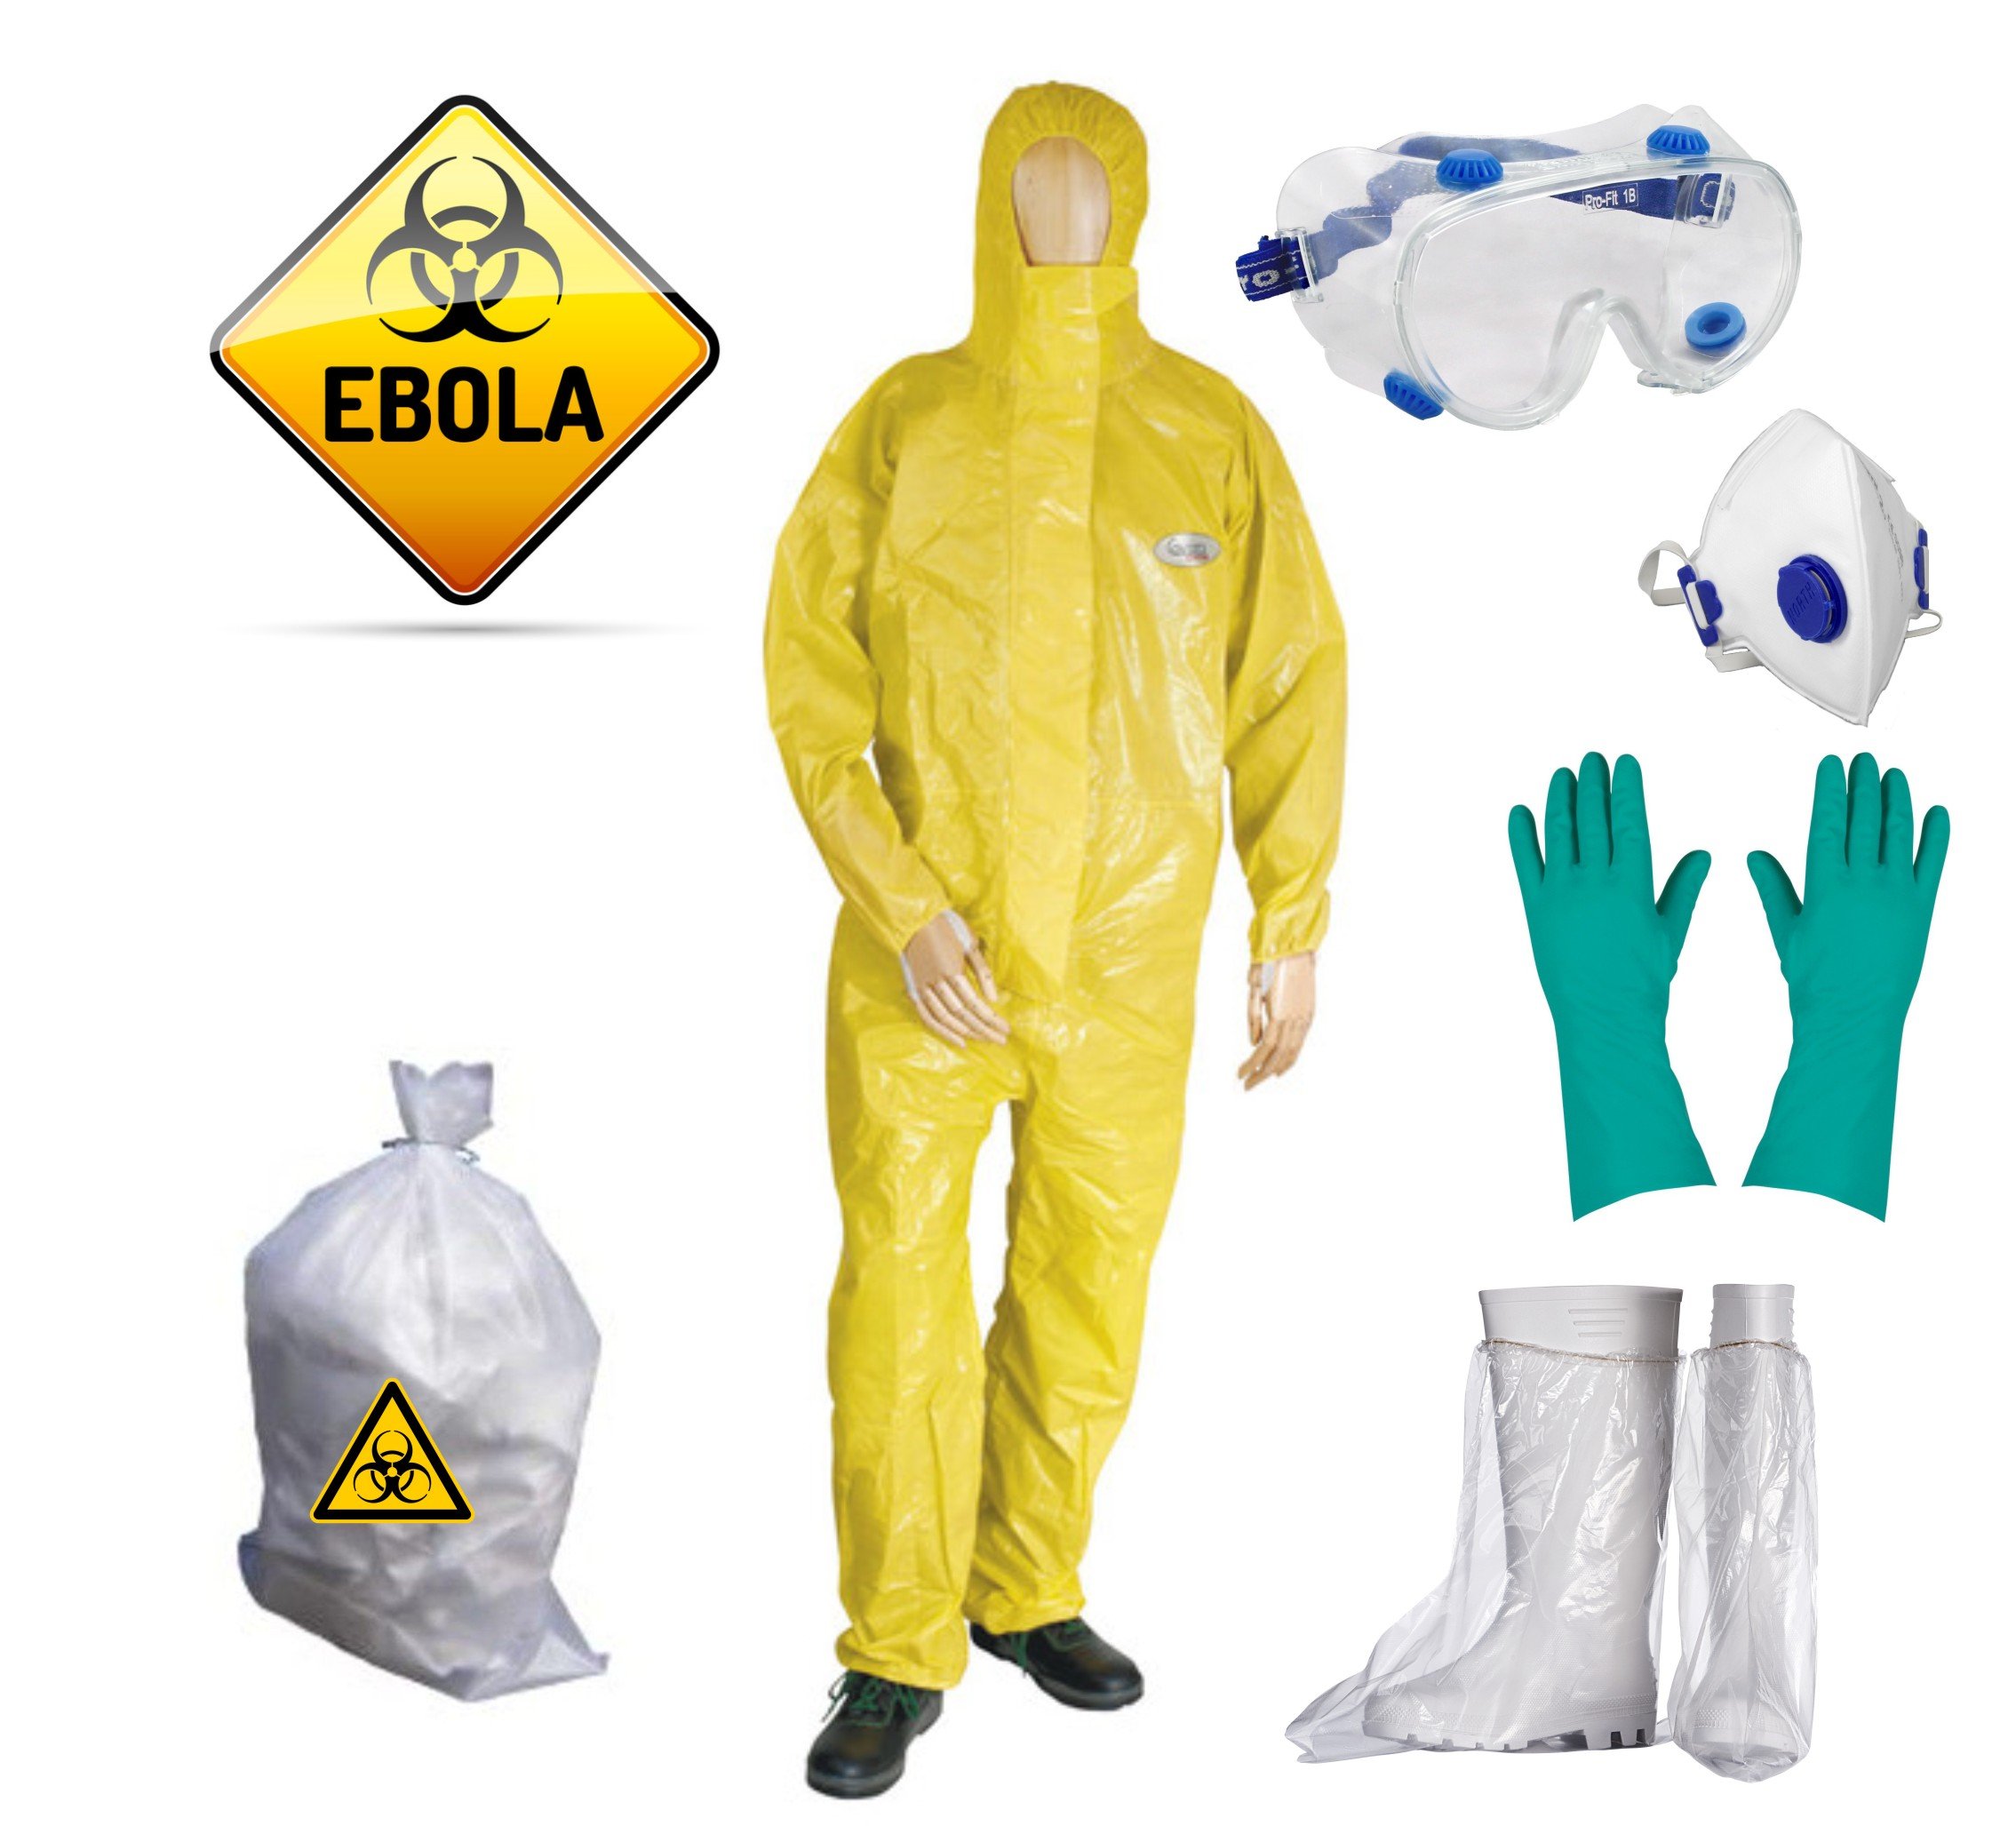 MeierMed Infektionsschutz Set - Ebola Schutz-Set - Professional - ECO